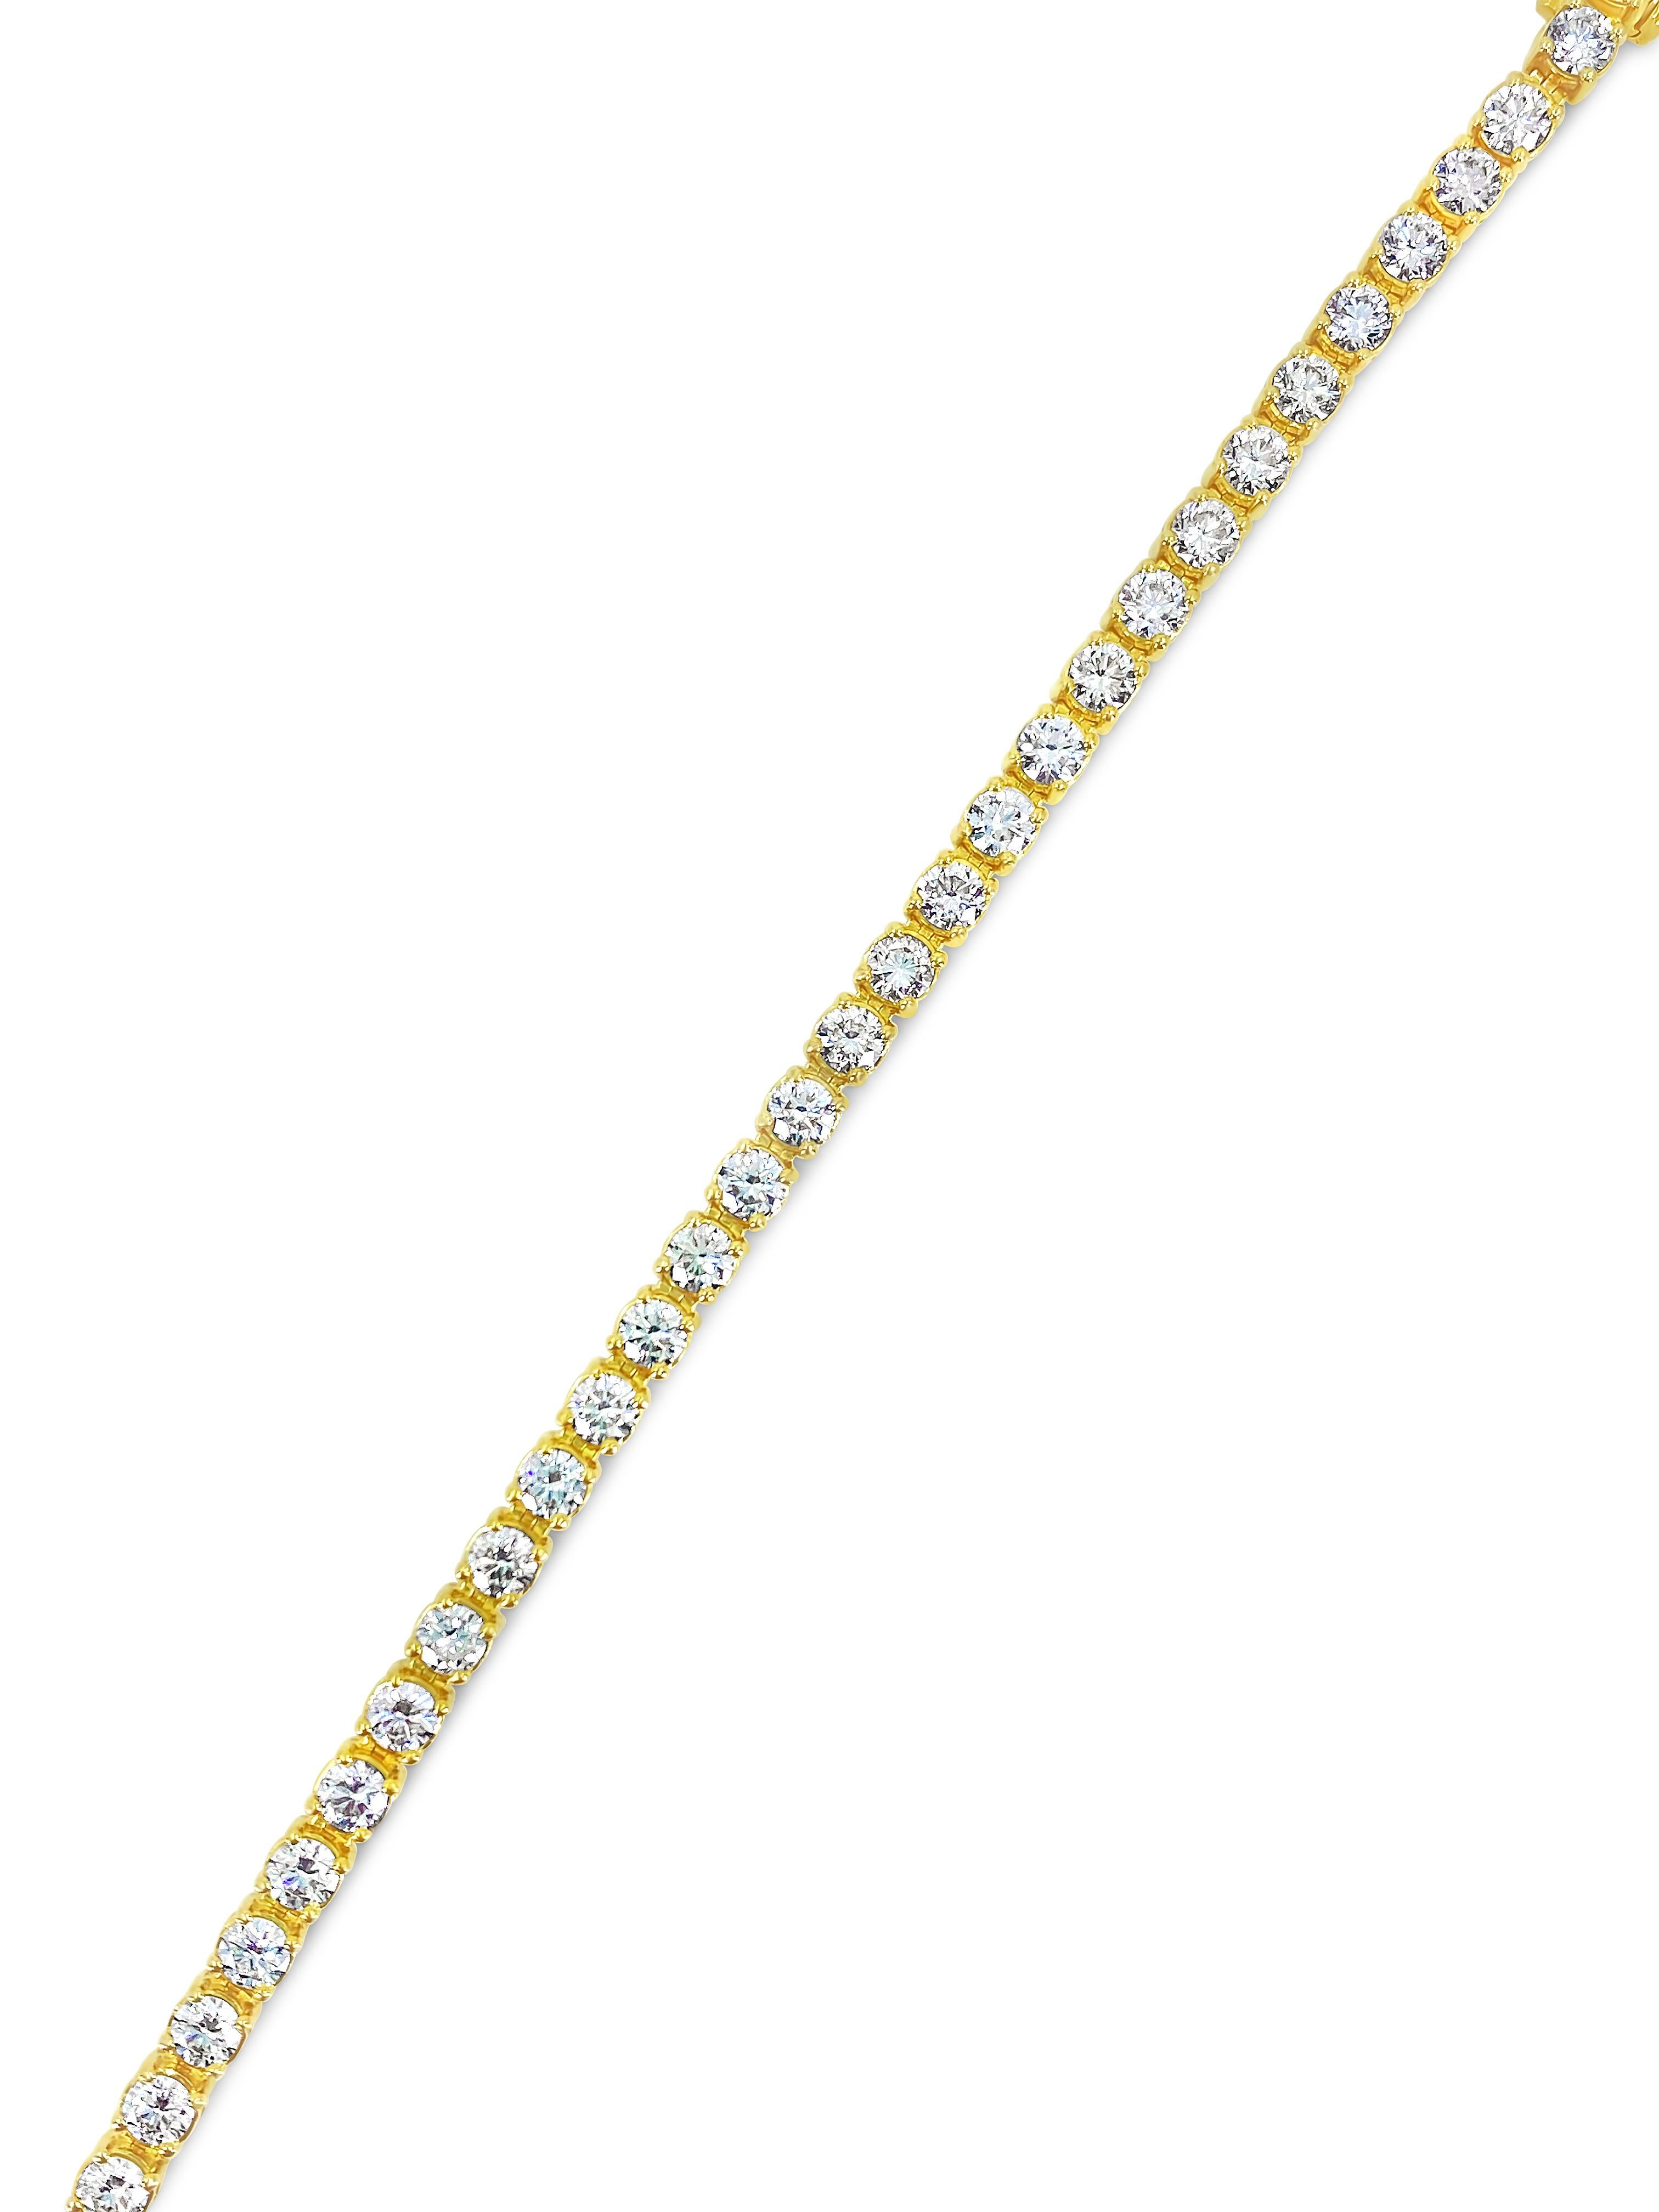 Contemporary 12.33 Carat Diamond Tennis Bracelet in 14k Gold For Sale